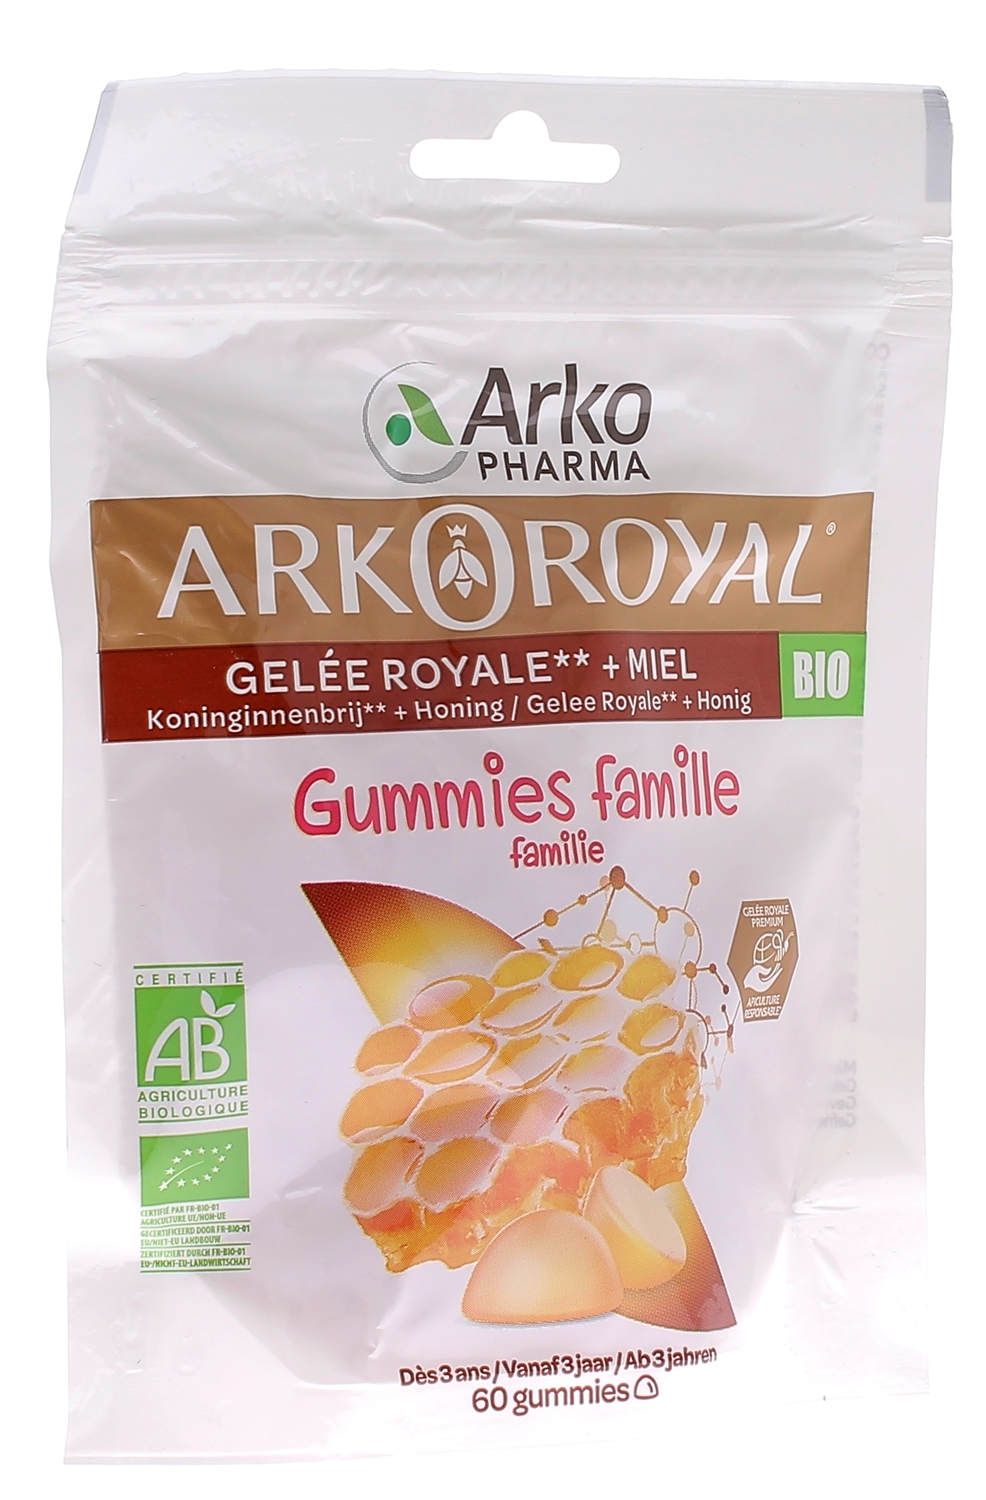 ArkoRoyal Gummies famille bio Arkopharma - sachet de 60 gummies